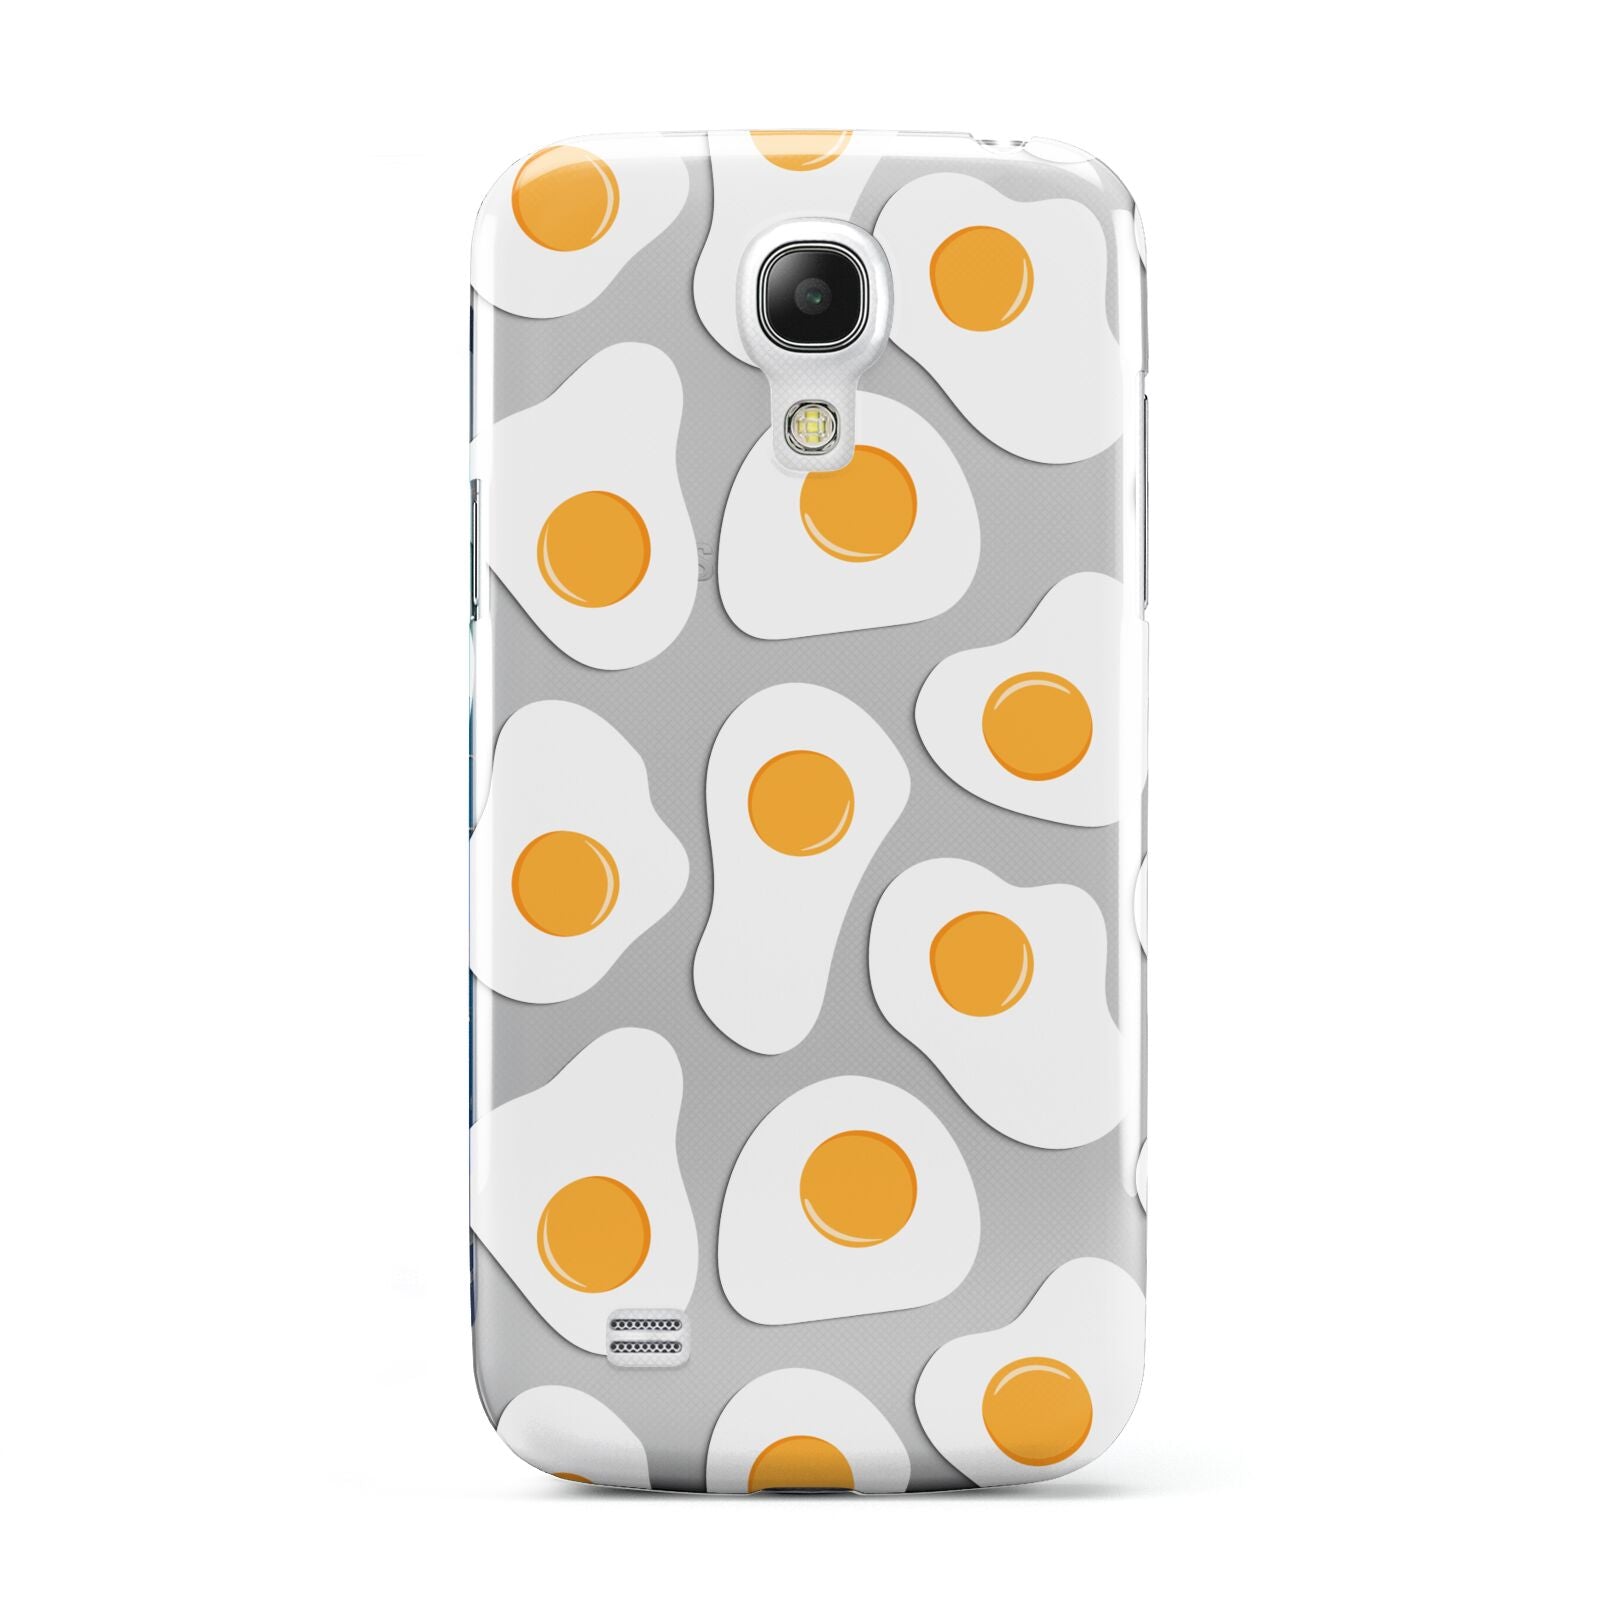 Fried Egg Samsung Galaxy S4 Mini Case